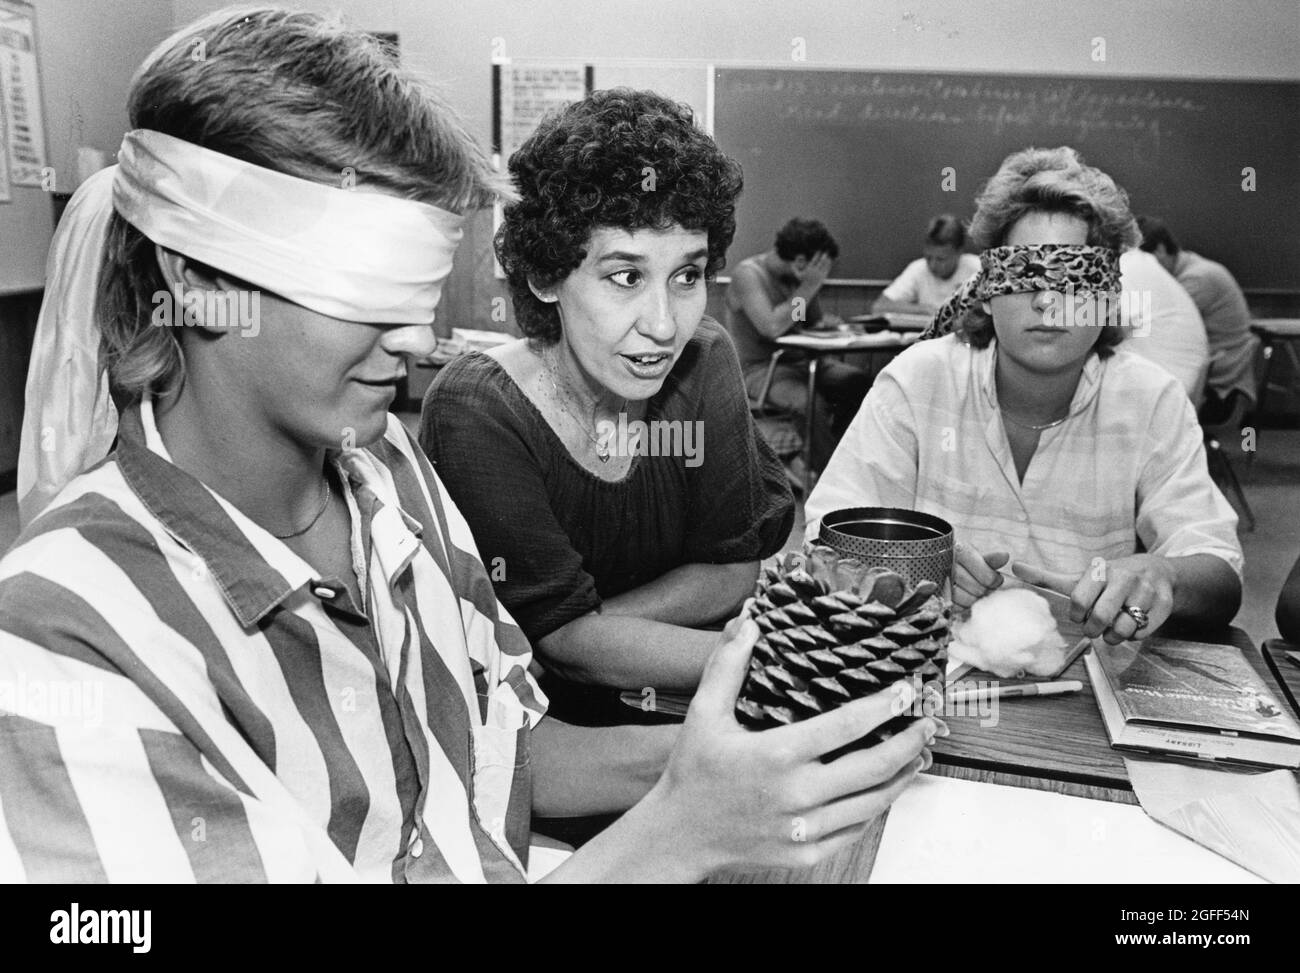 Round Rock Texas USA, 1991: High school English teacher uses sensory perception technique to teach writing skills, File EV3-0357  ©Bob Daemmrich Stock Photo